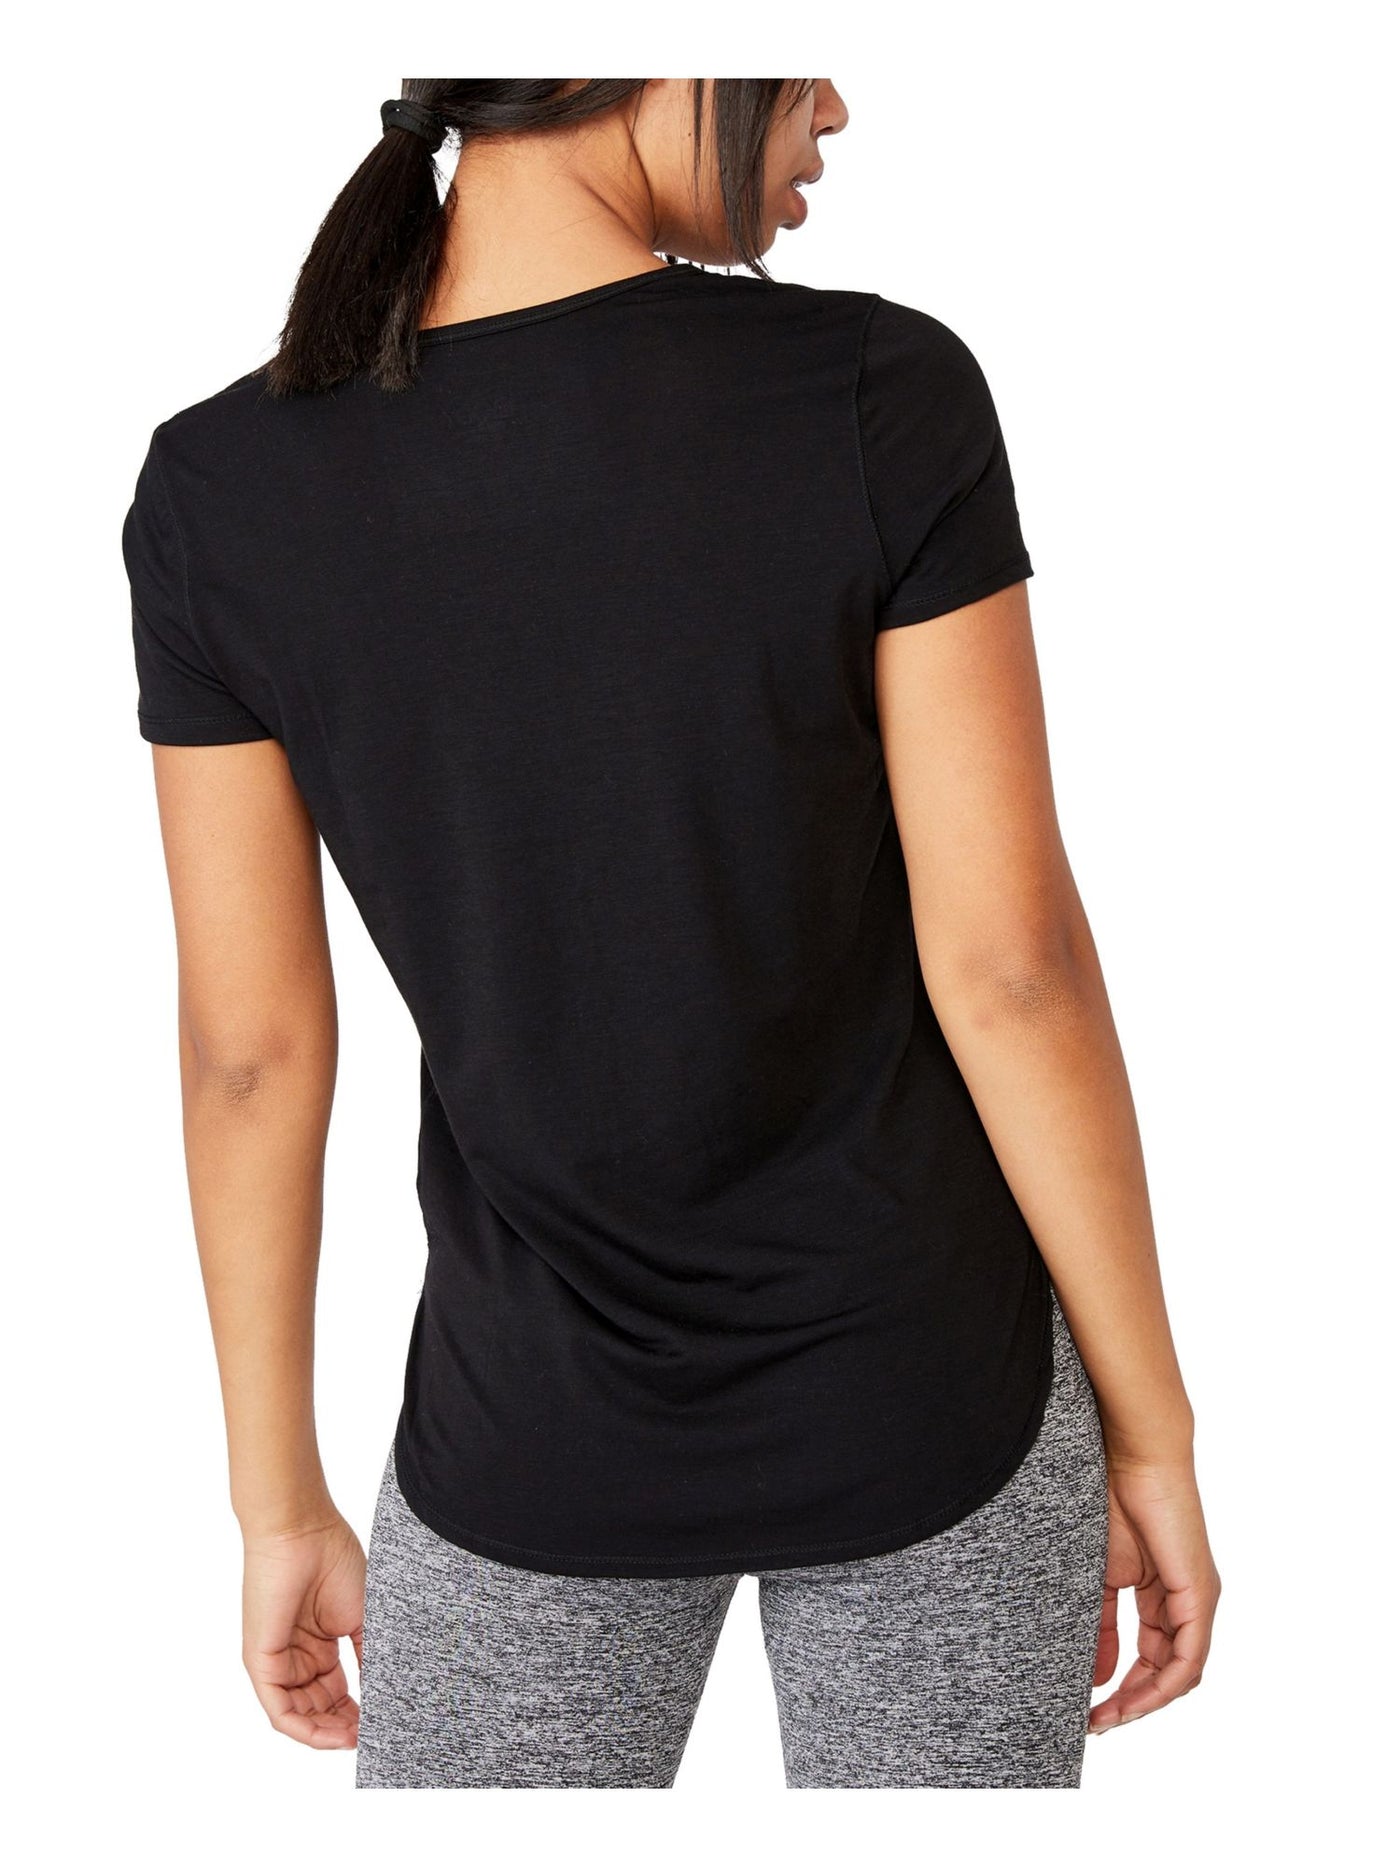 BODY Womens Black Short Sleeve Scoop Neck T-Shirt S